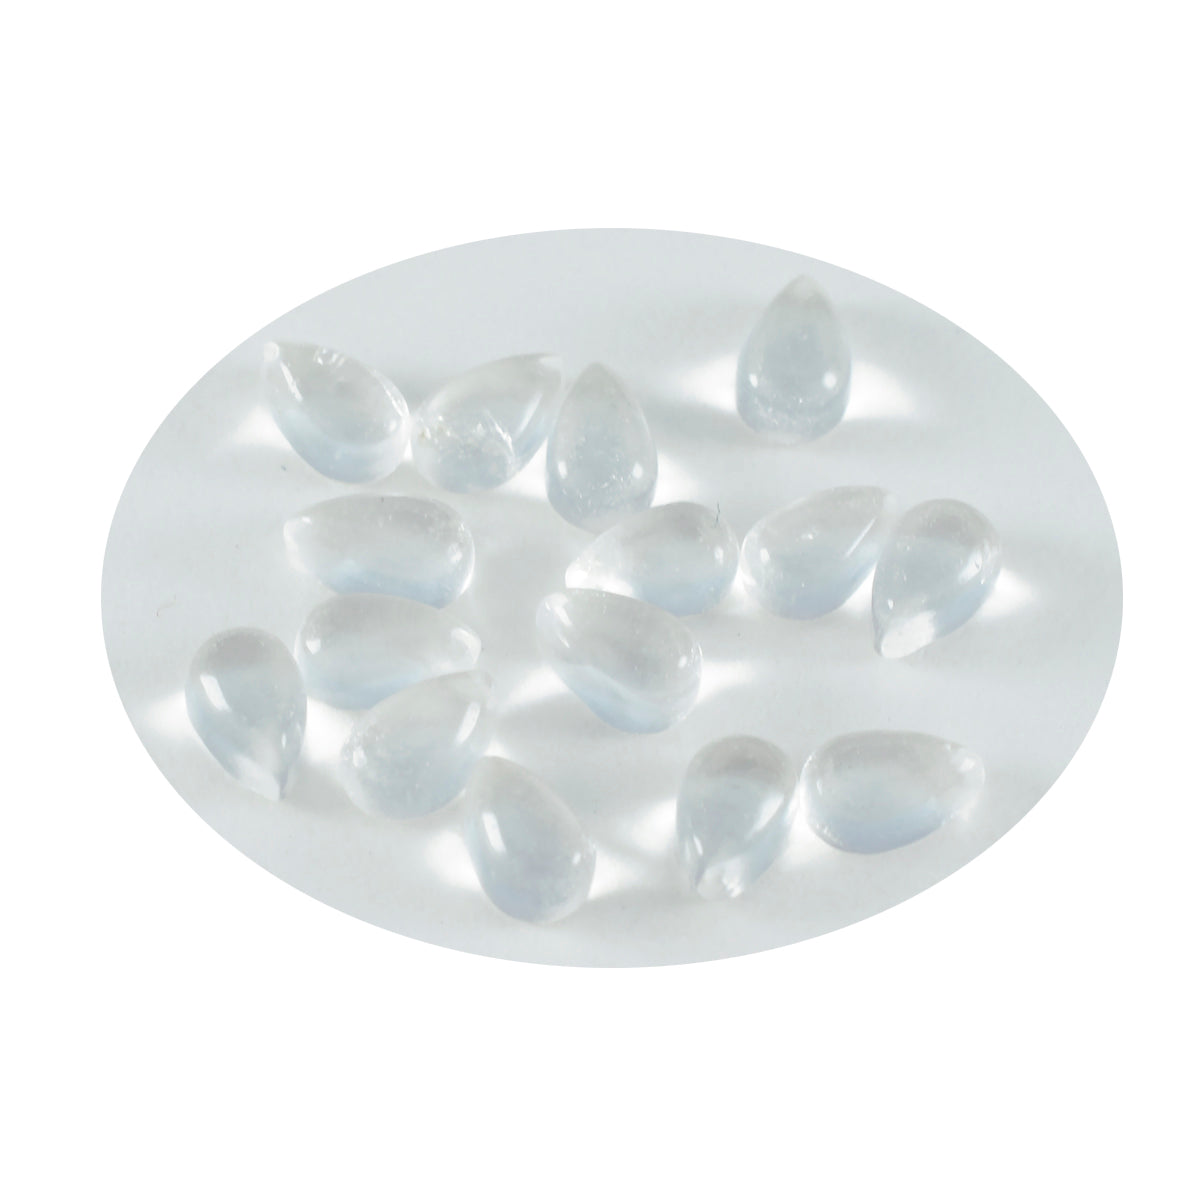 Riyogems 1PC White Crystal Quartz Cabochon 5x7 mm Pear Shape superb Quality Loose Gemstone